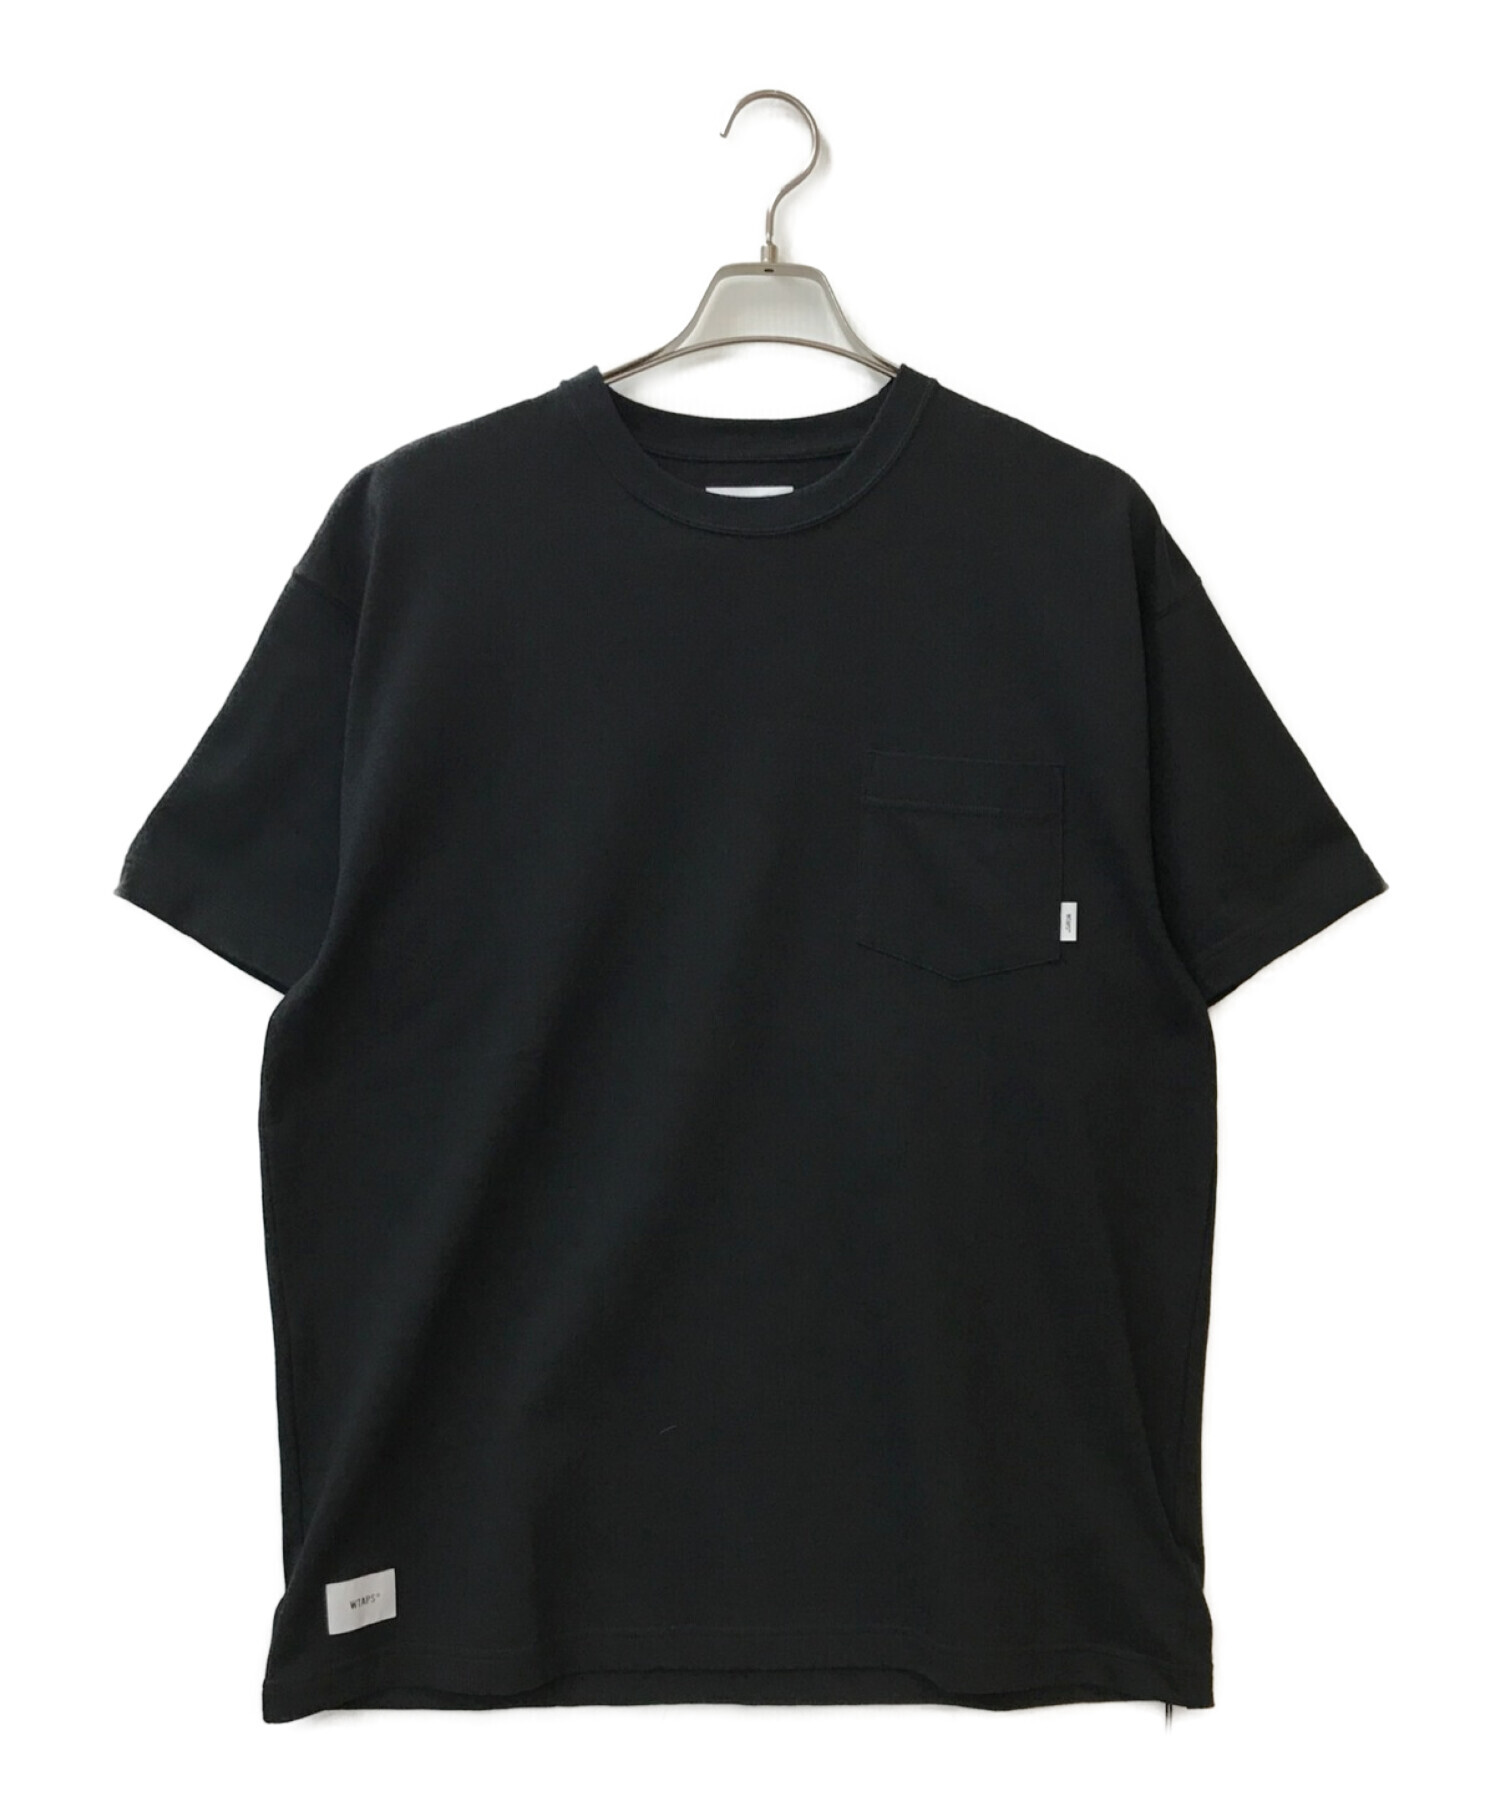 新品 Wtaps AII 01 SS Tee Shirt Black M